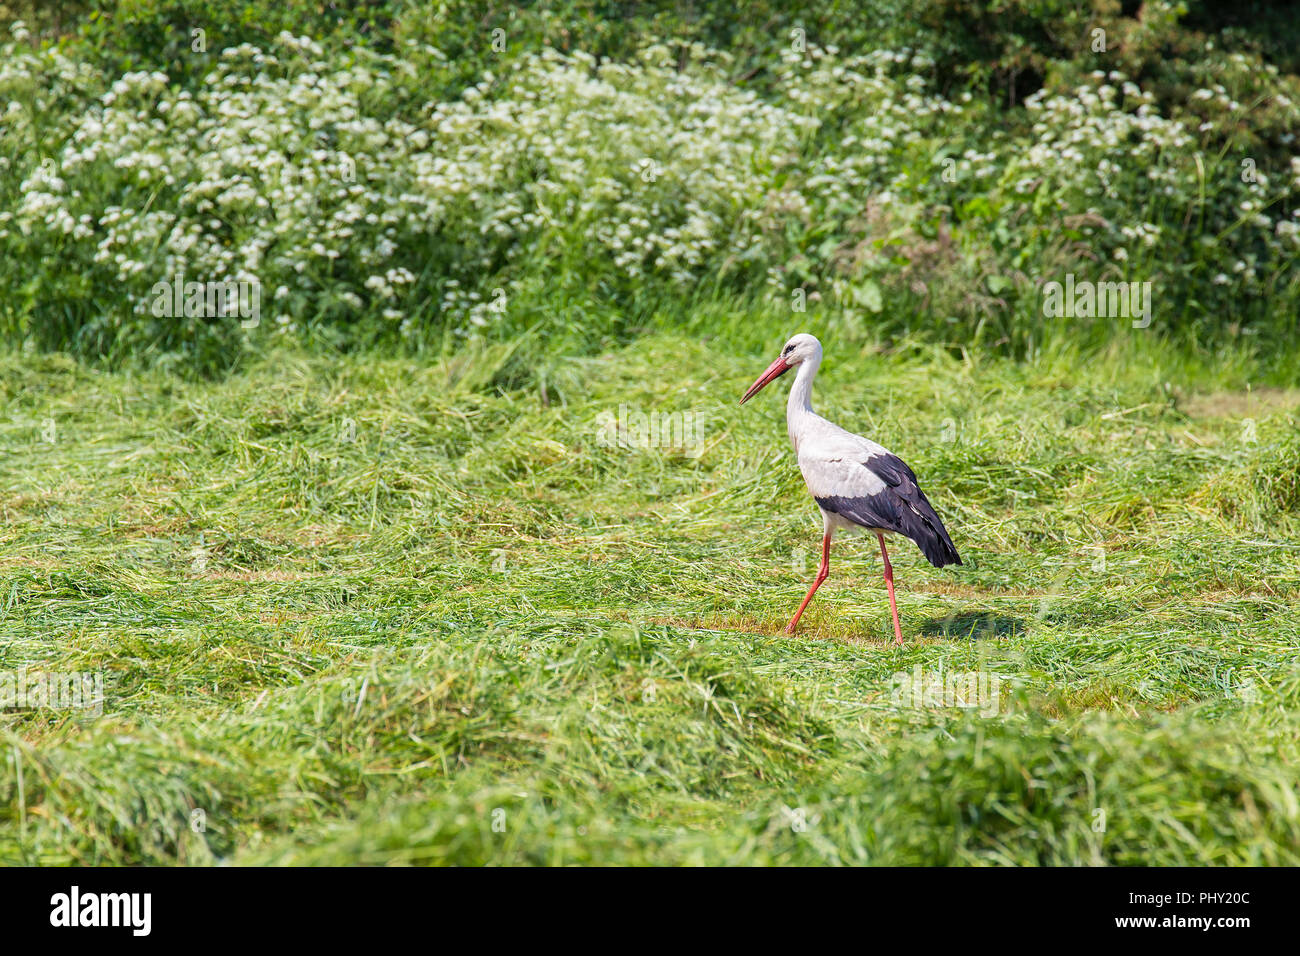 Stork buscando comida en césped cortado de pradera holandés Foto de stock